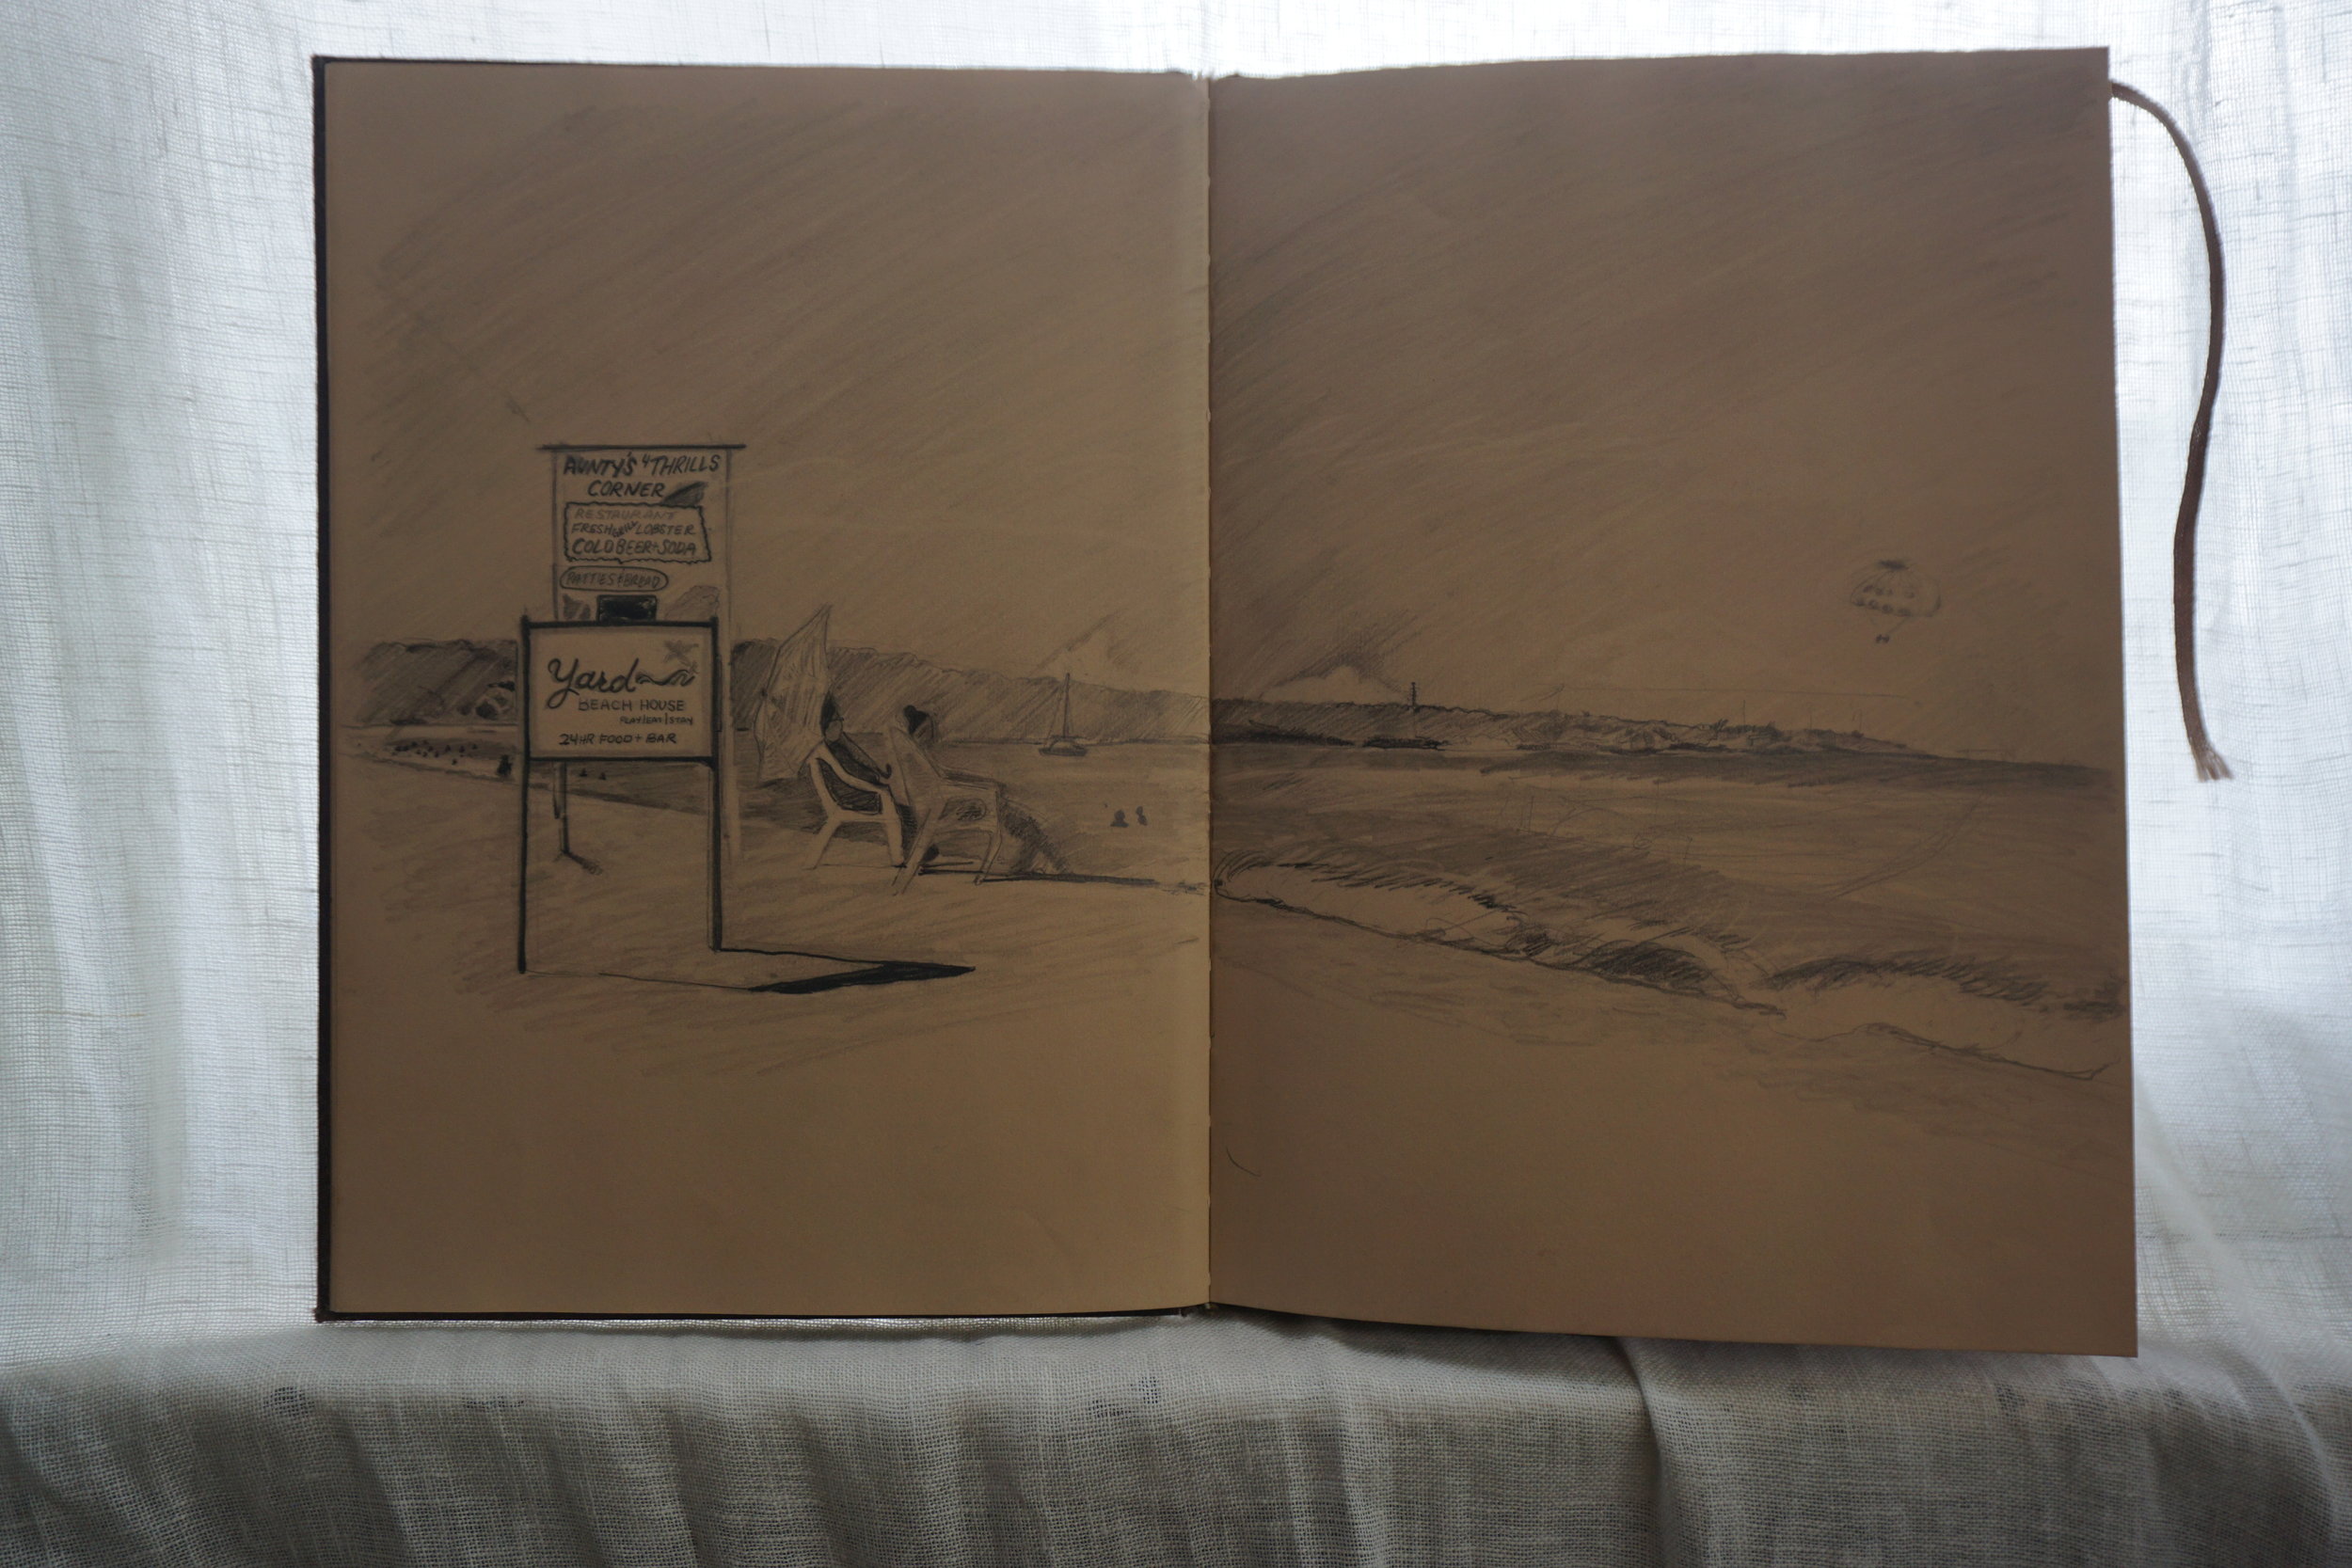 kerbi-urbanowski-sketchbook-landscape-negril-7milebeach